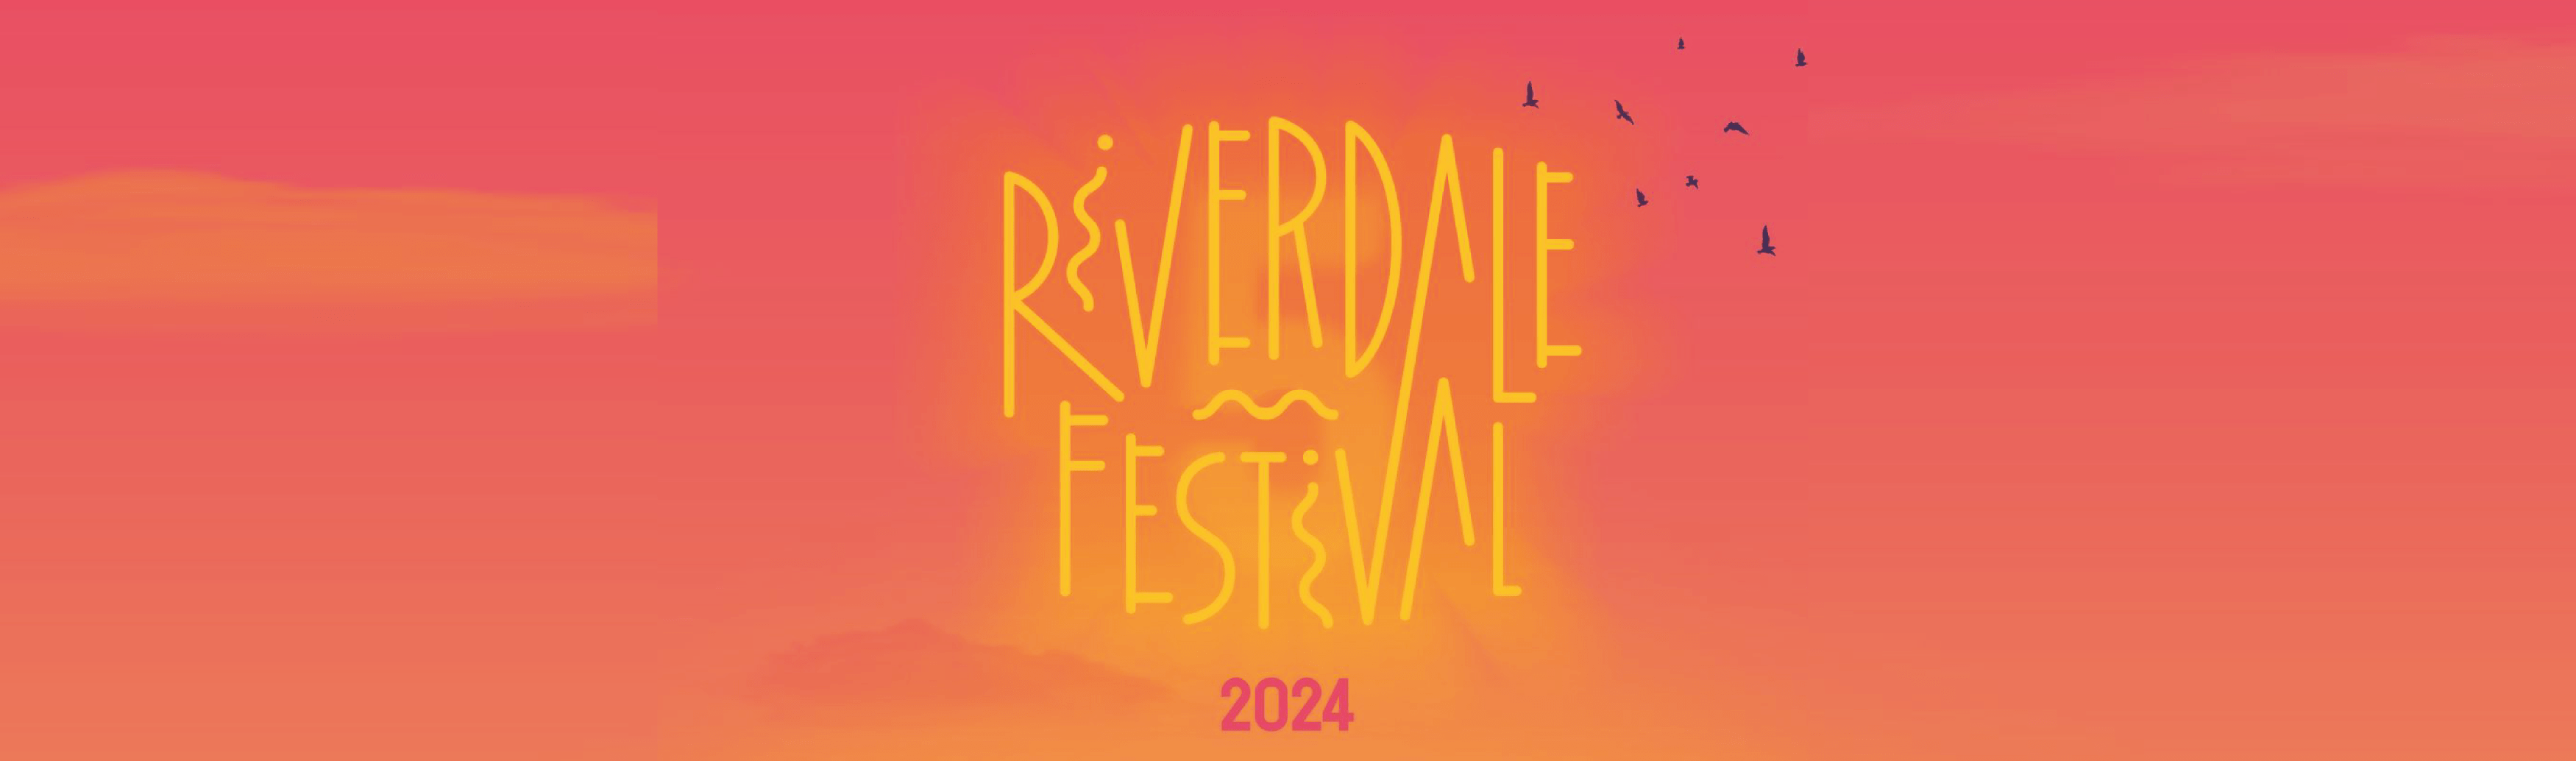 Riverdale Festival banner_large_desktop